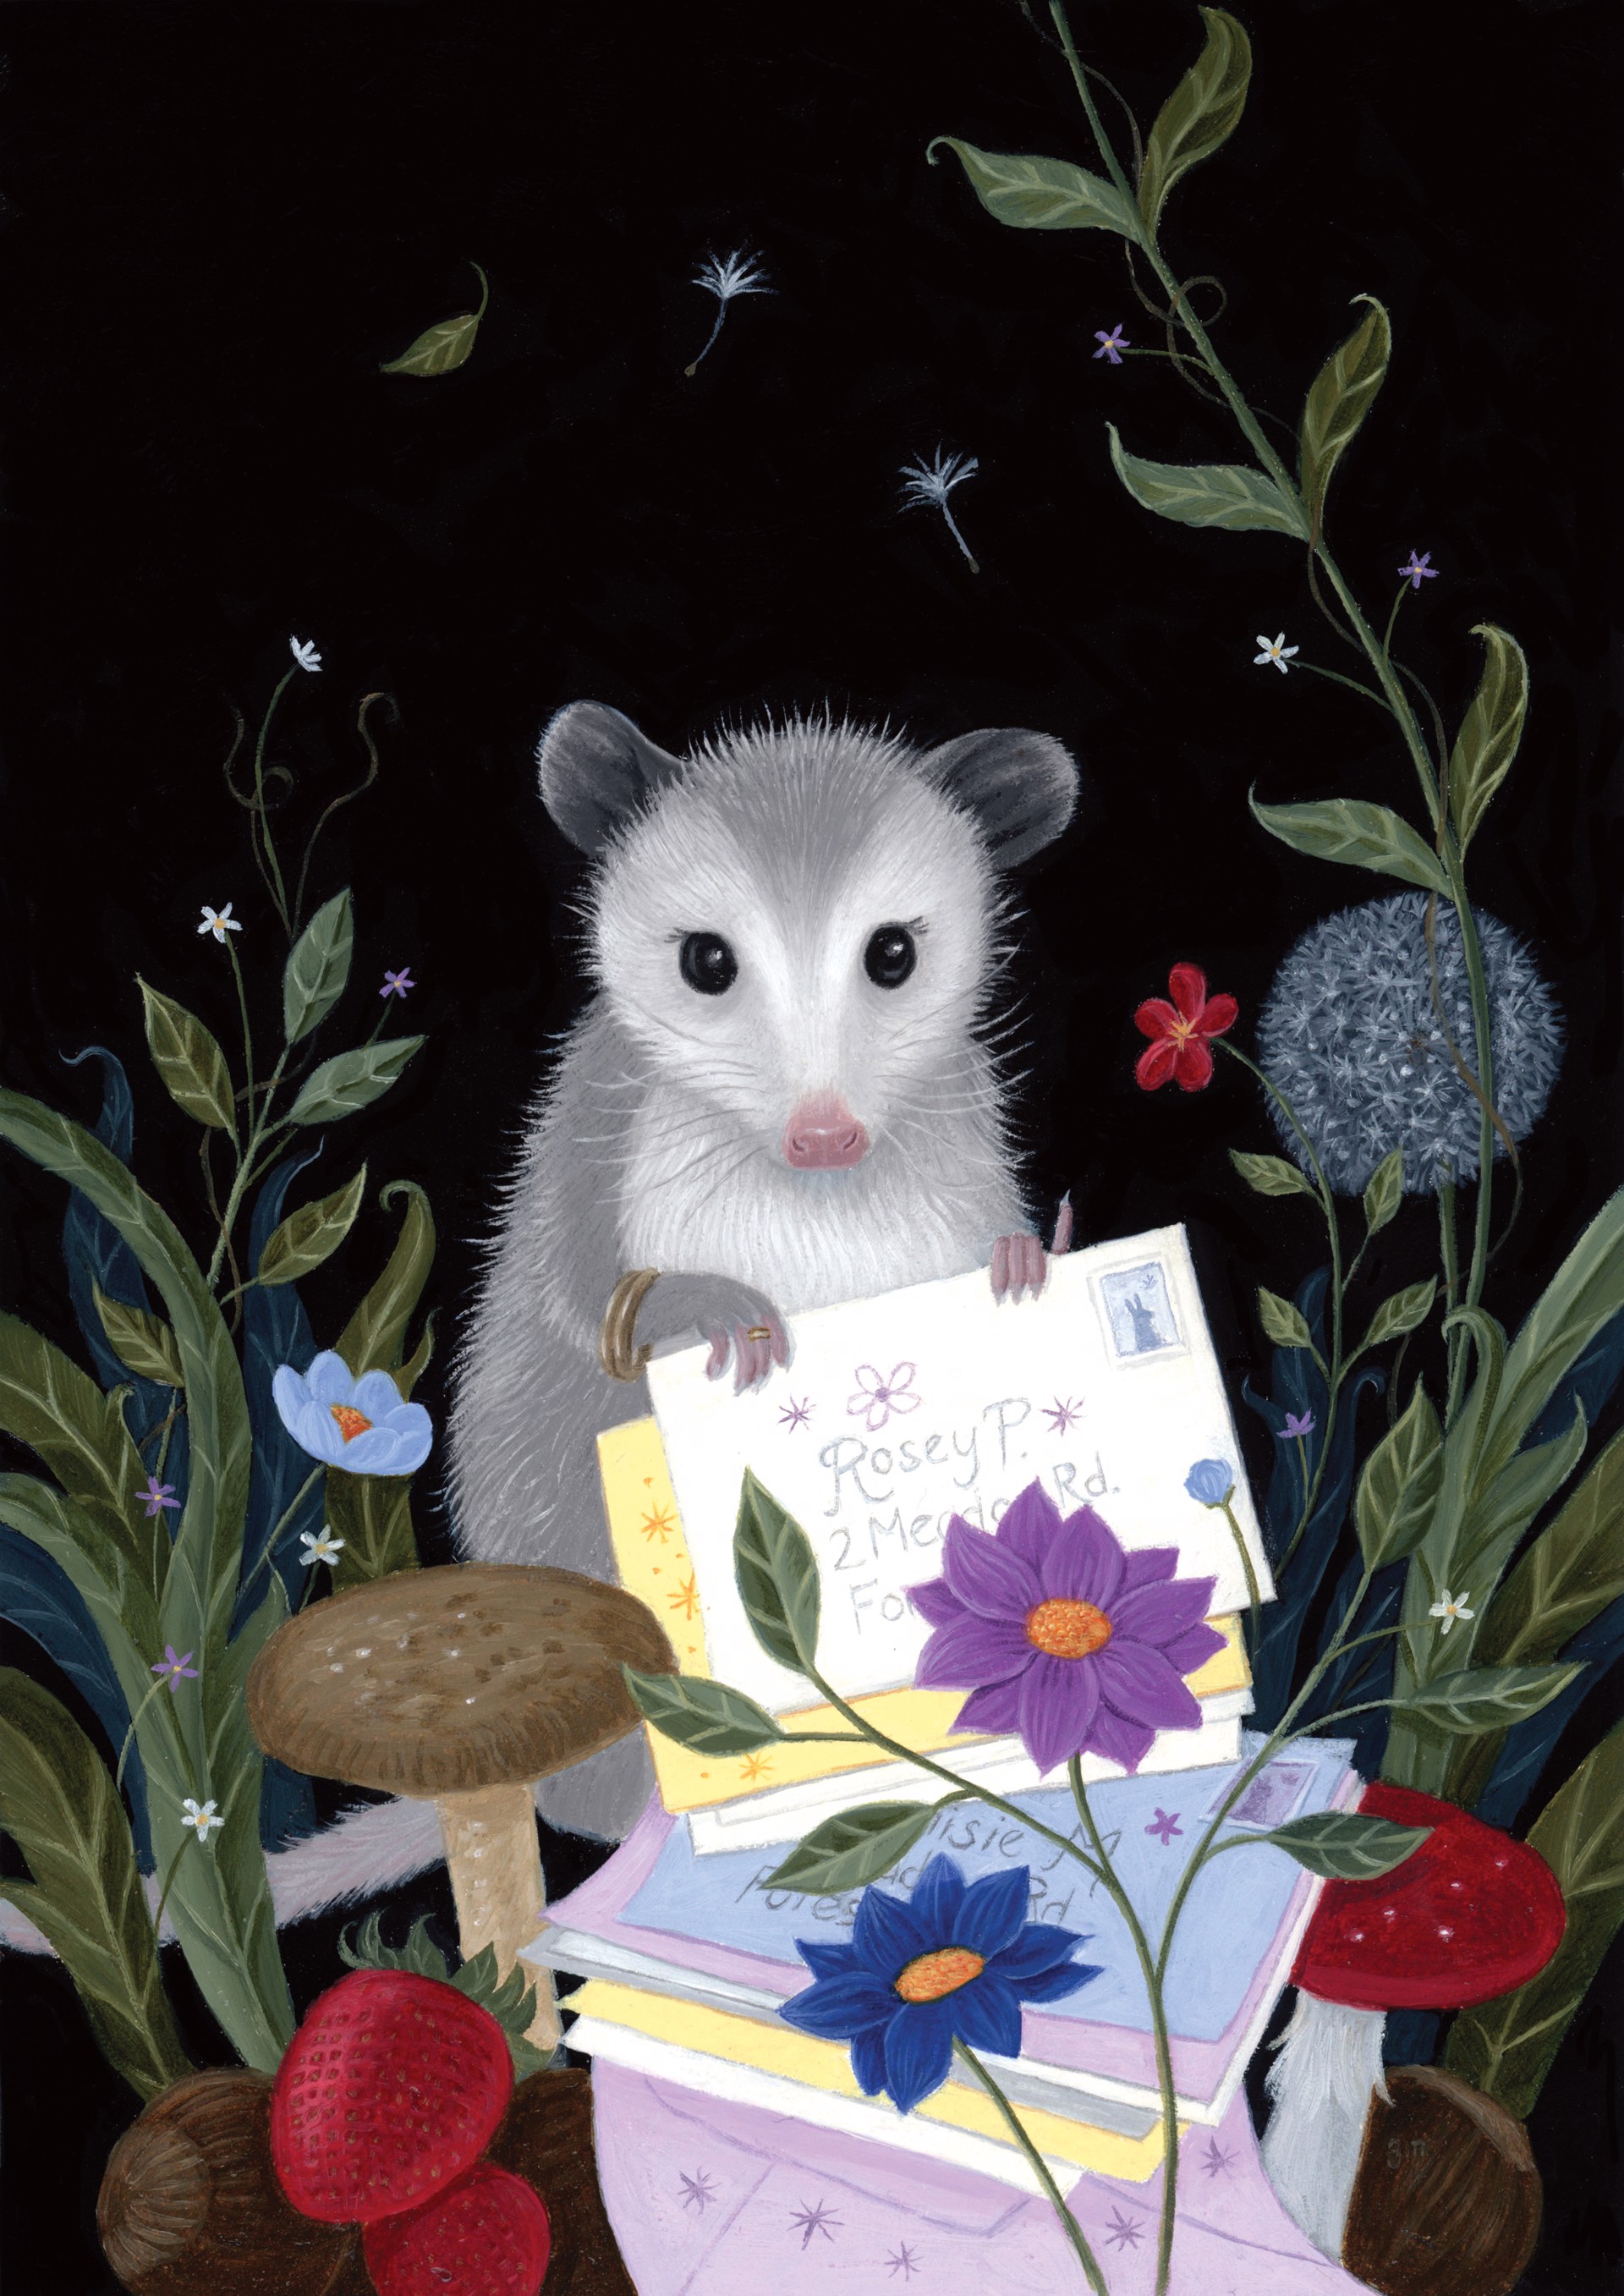 A Possum Party by Gina Matarazzo